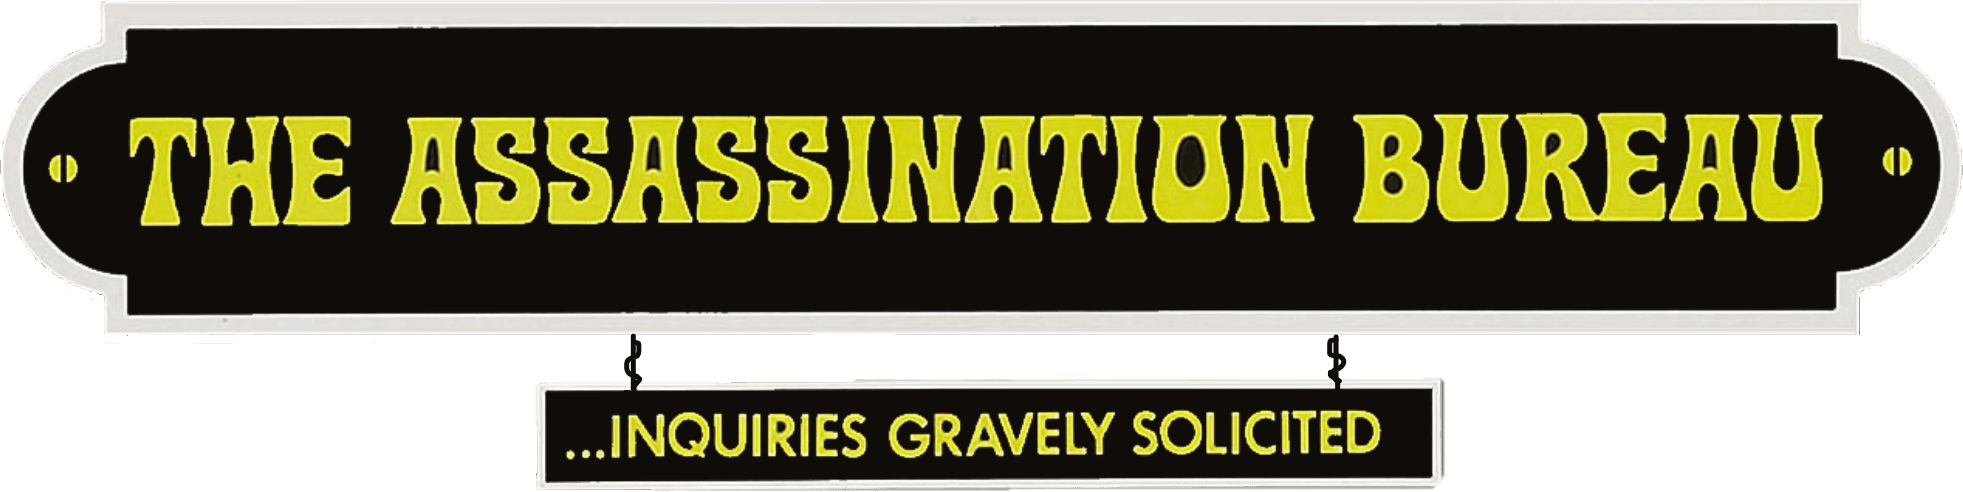 The Assassination Bureau logo